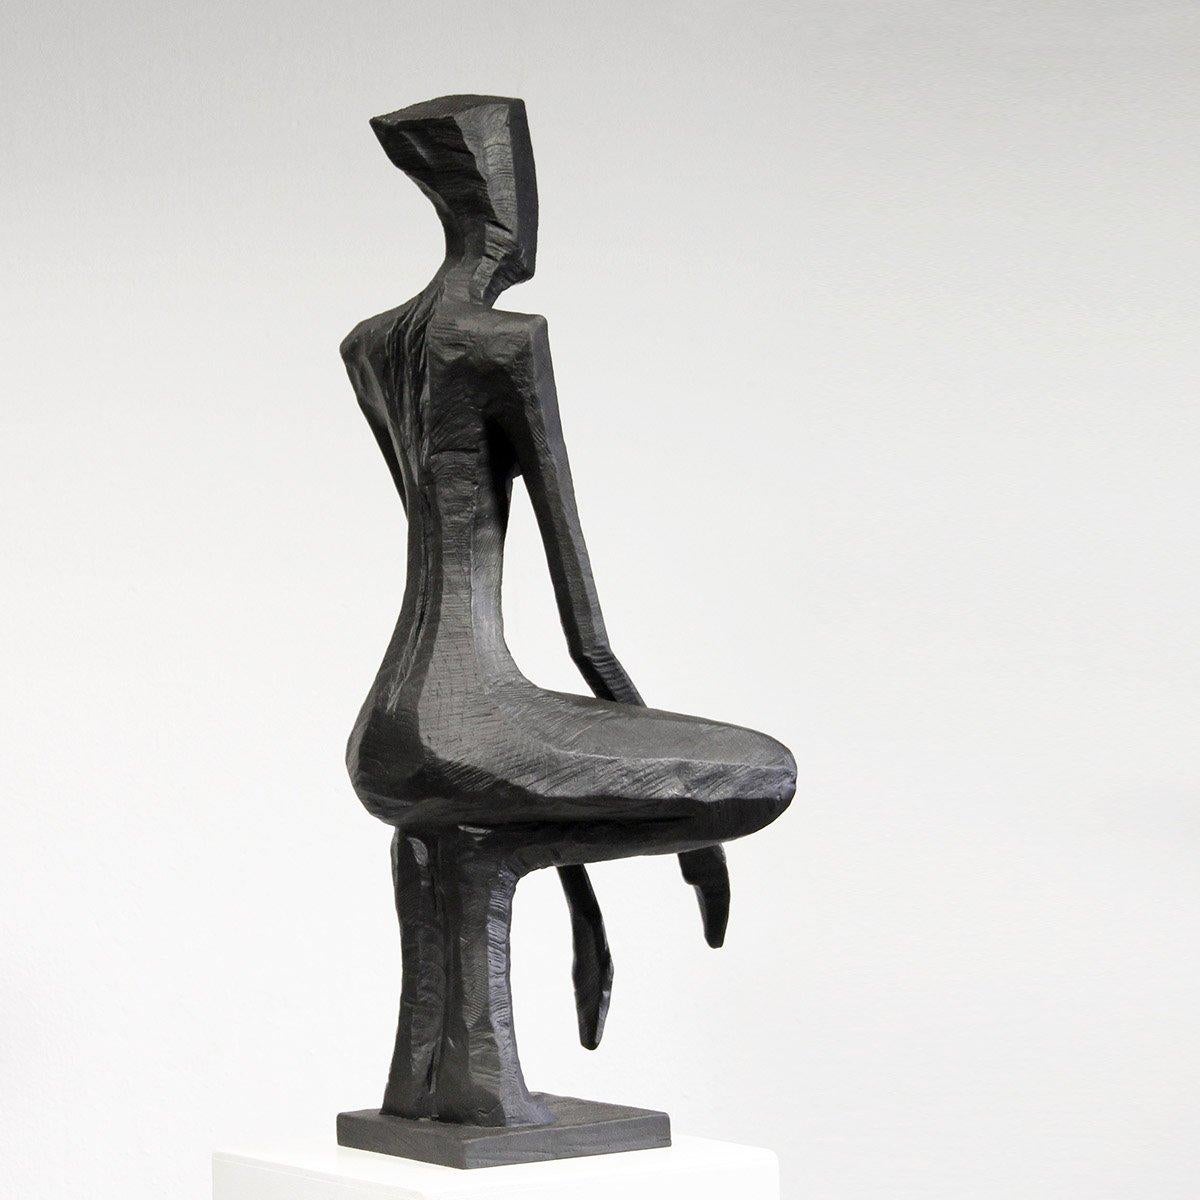 Callindra by Nando Kallweit 
Bronze sculpture, edition of 13

Dimensions: 65cm x 30cm x 22cm